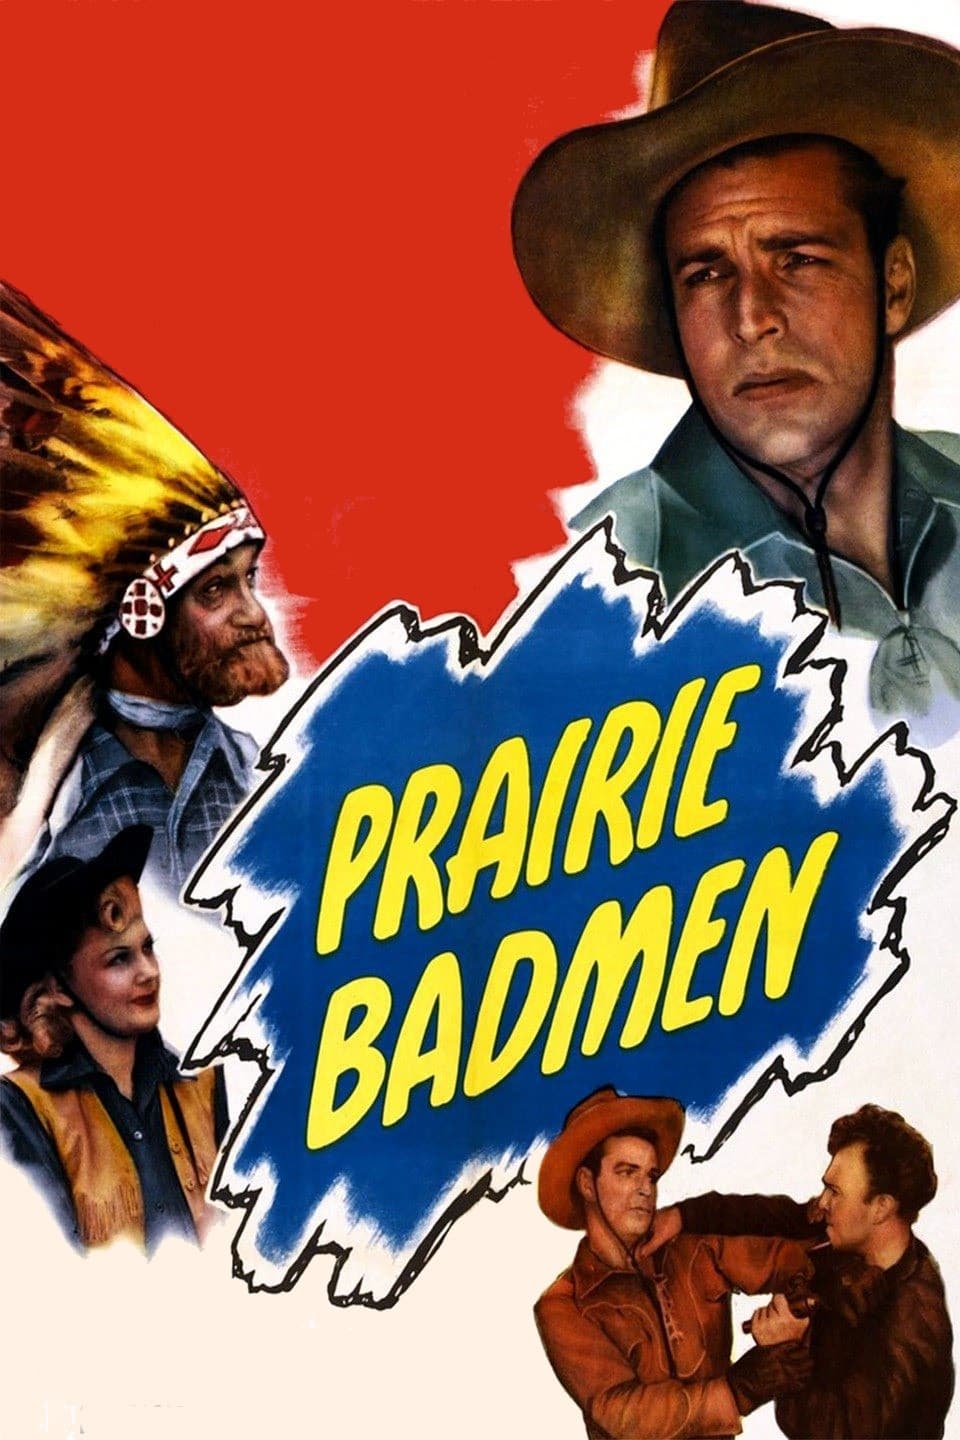 Prairie Badmen (1946)